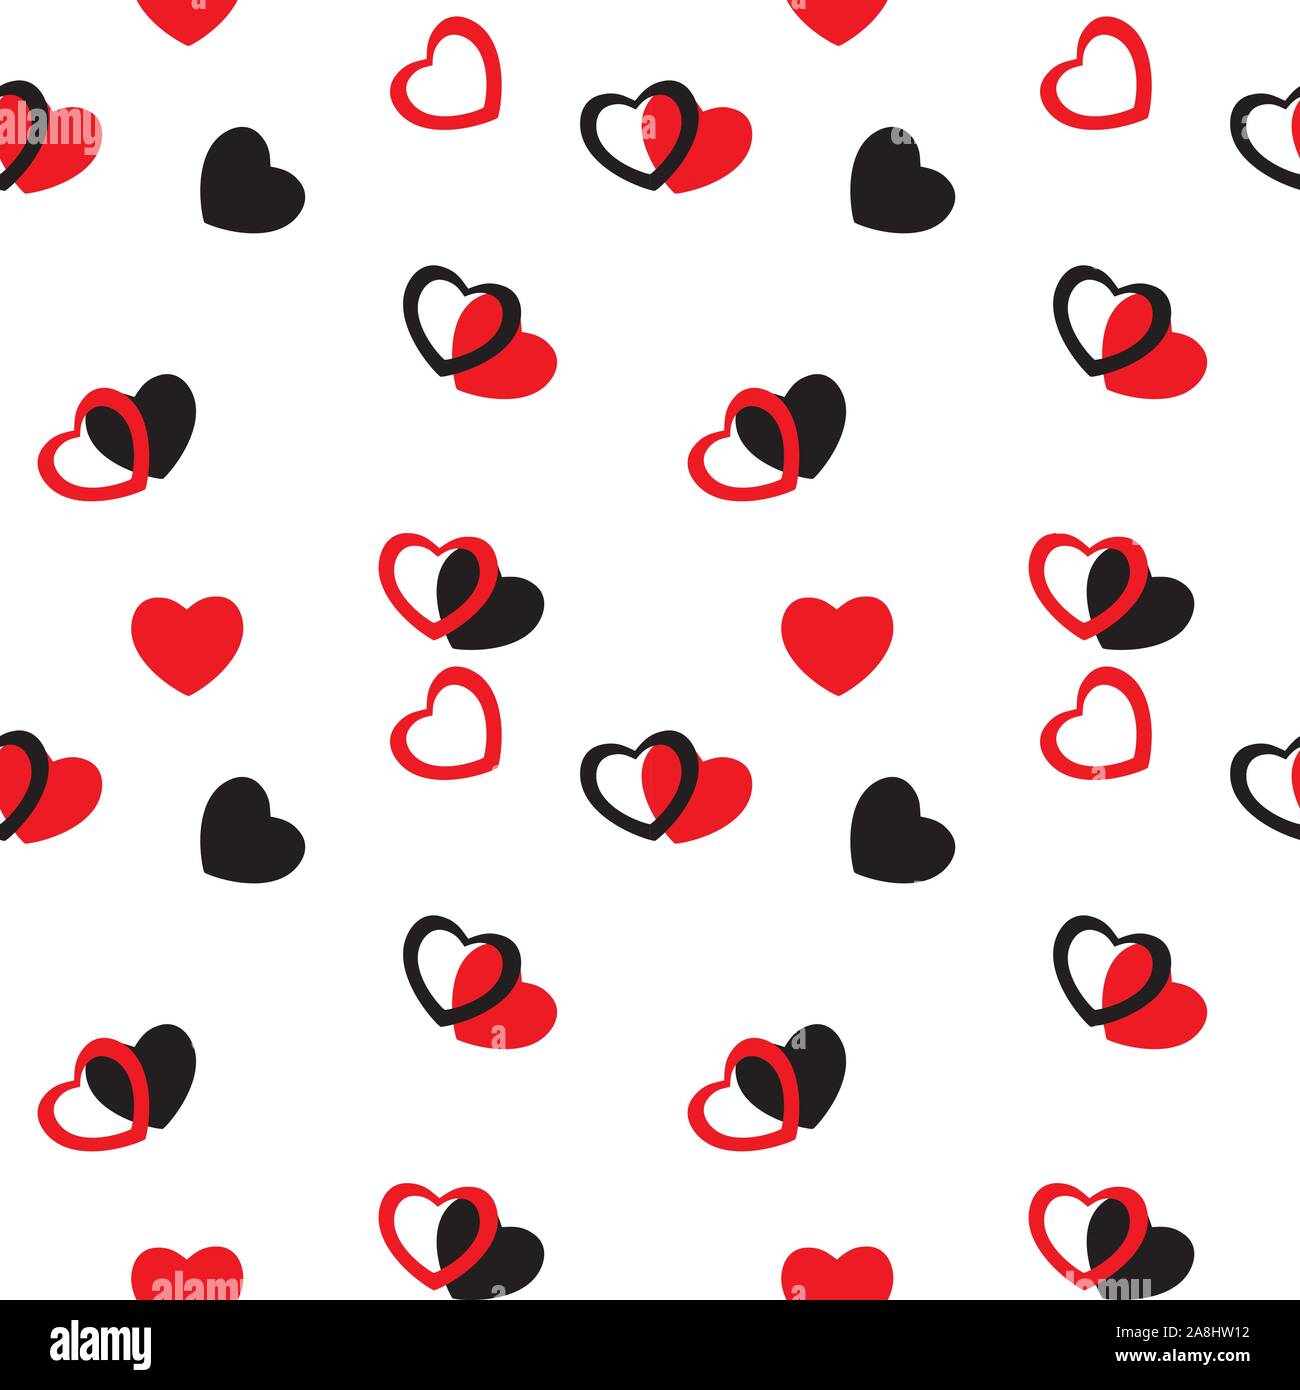 Heart love seamless pattern background. Vector illustration Stock Vector